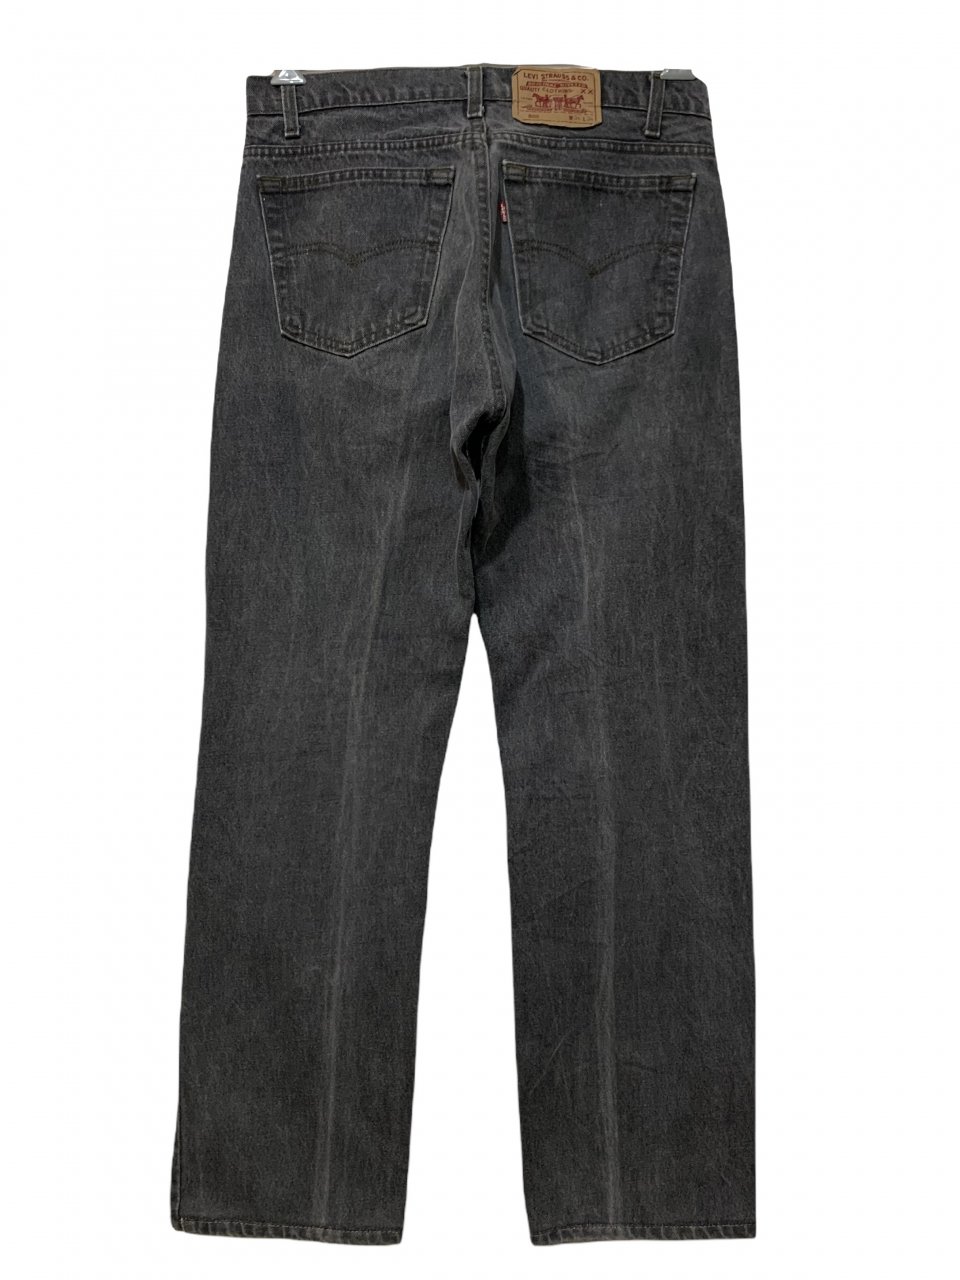 33x33.75 Levi's 505 High Rise taille donkerblauwe jeans Vintage originele jaren 80 USA Rood Tab 33x34tag Kleding Gender-neutrale kleding volwassenen Jeans 